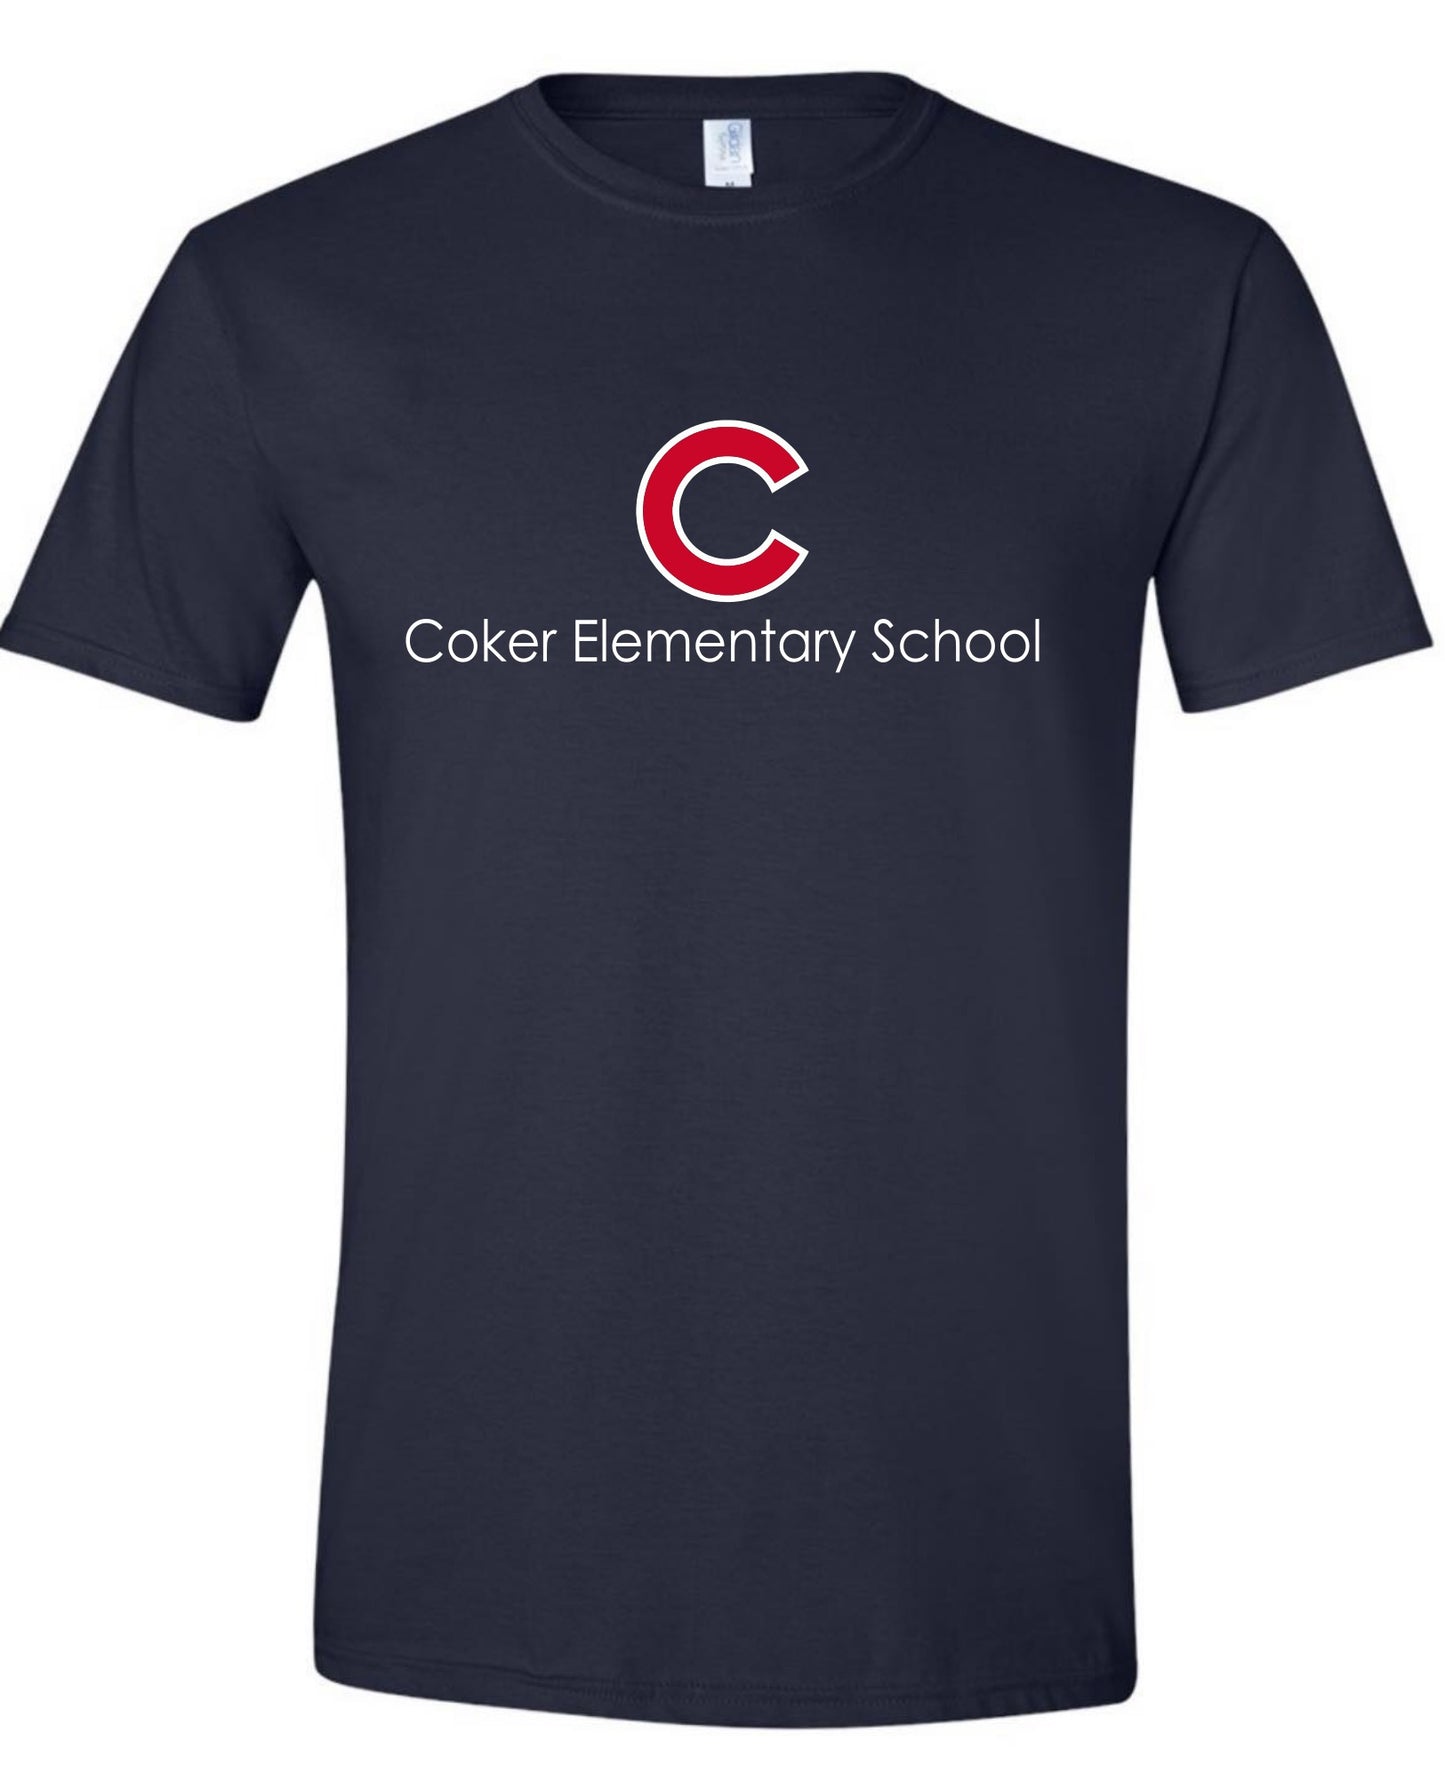 Coker Elementary School Tshirt